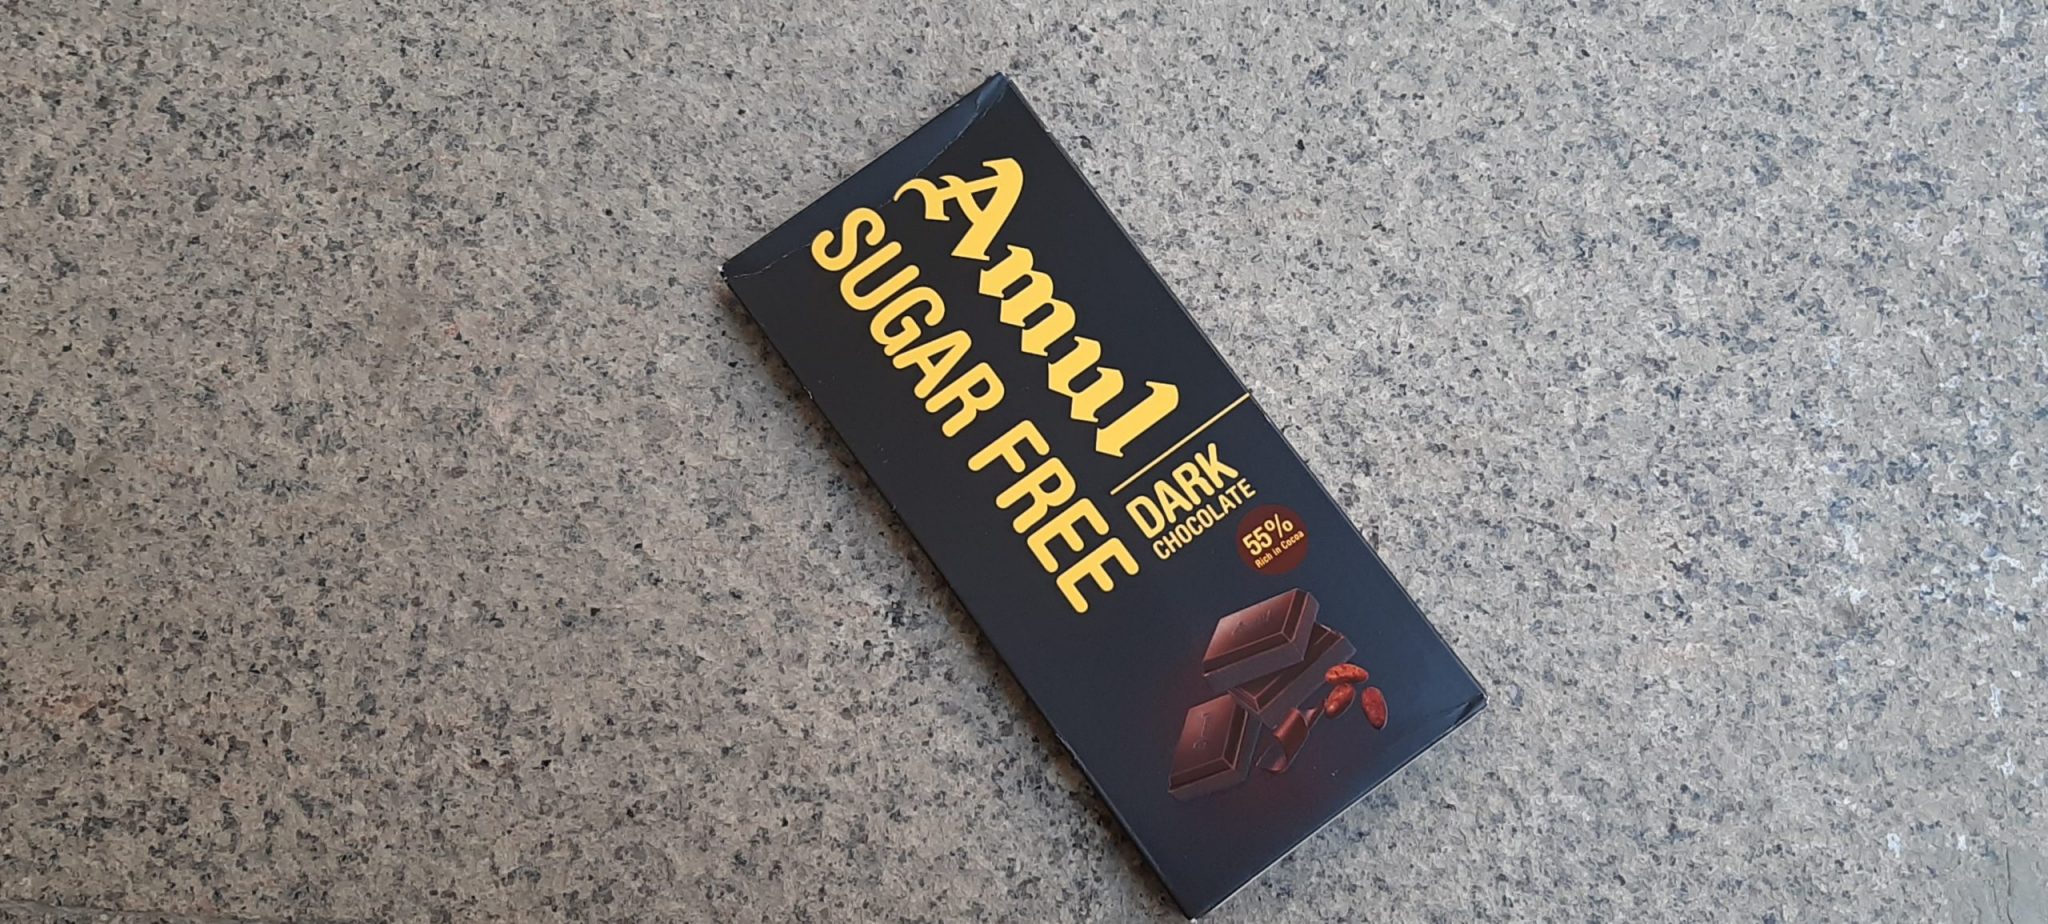 amul sugar free dark chocolate